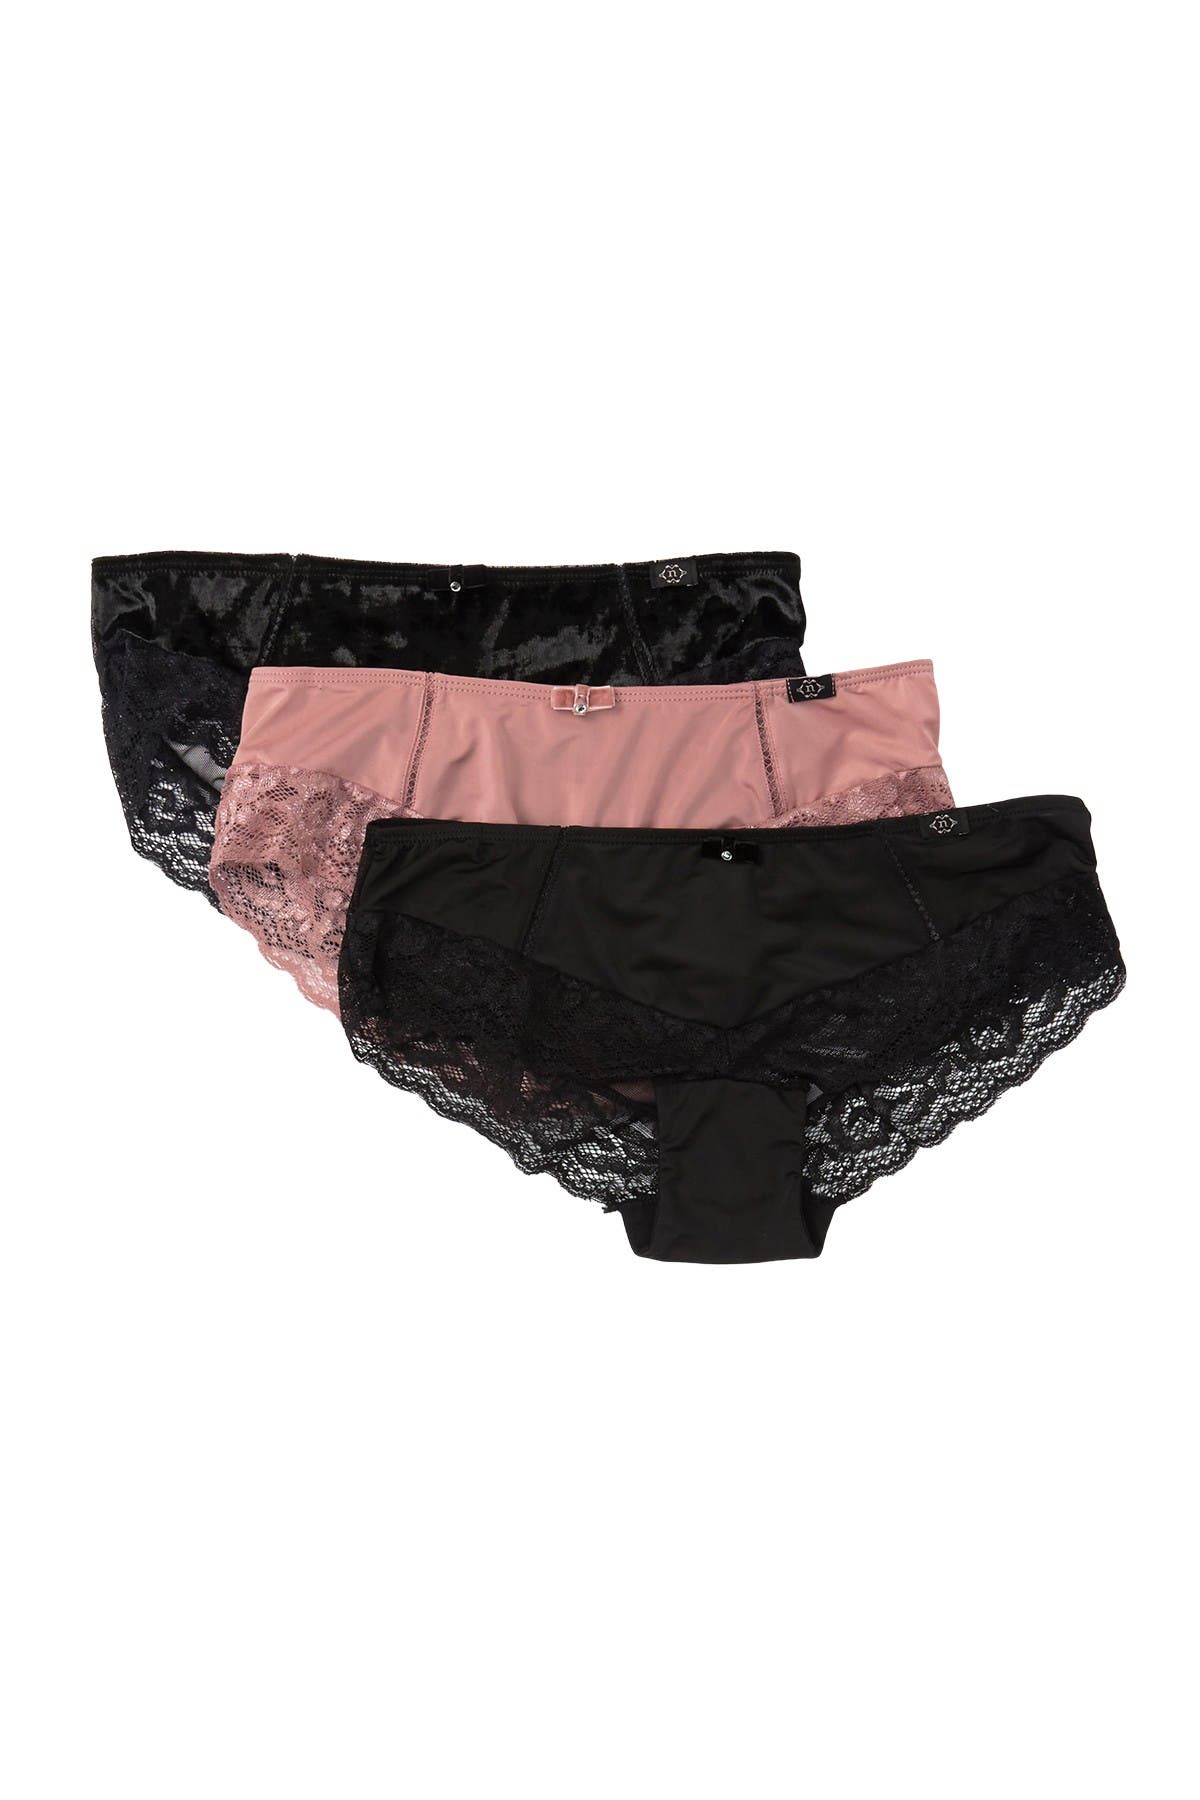 Nanette Lepore Womens Multi Pack Panty Panties